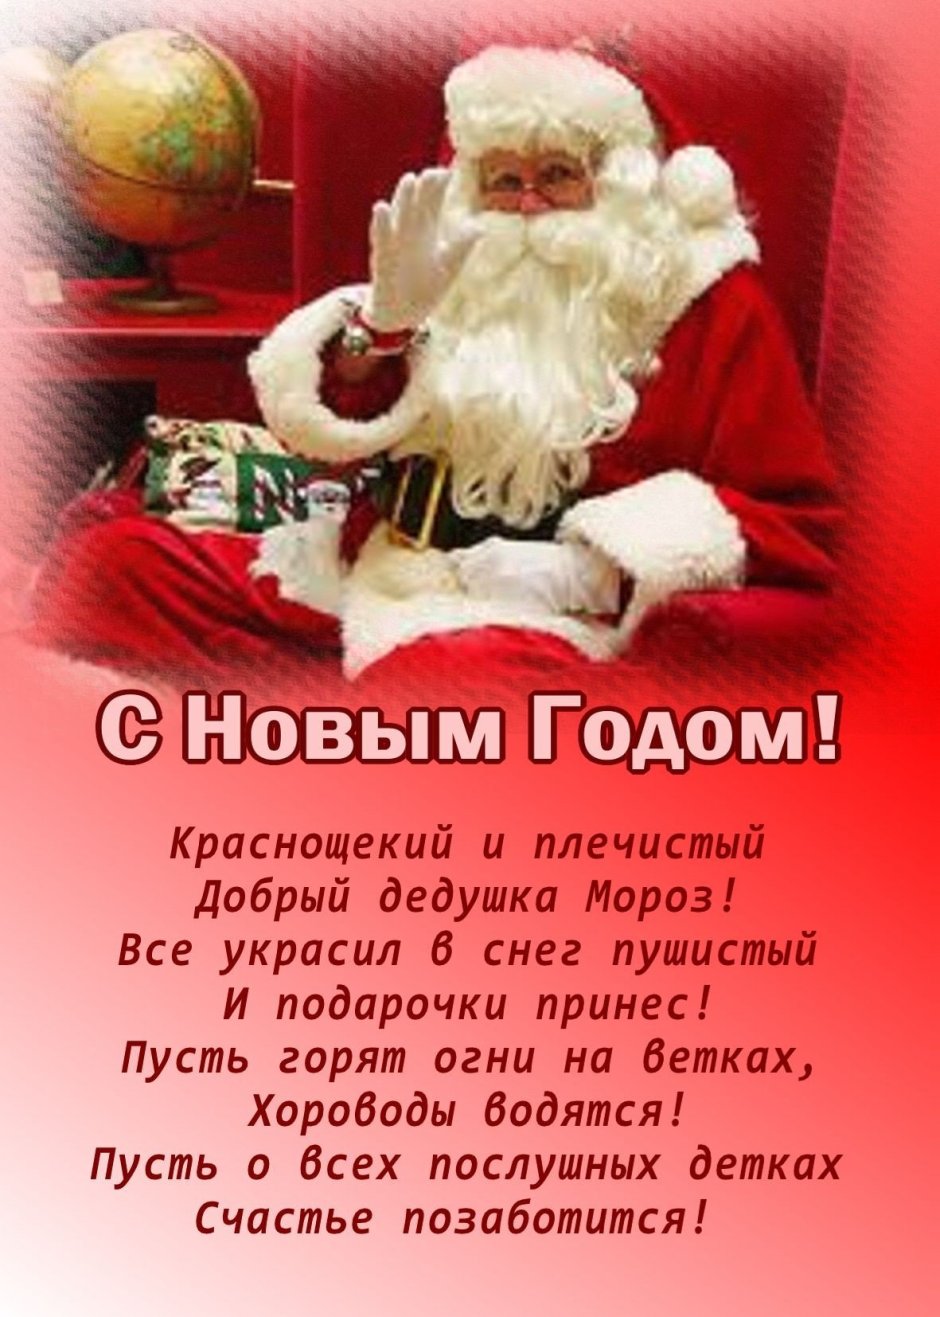 Приглашение от Деда Мороза